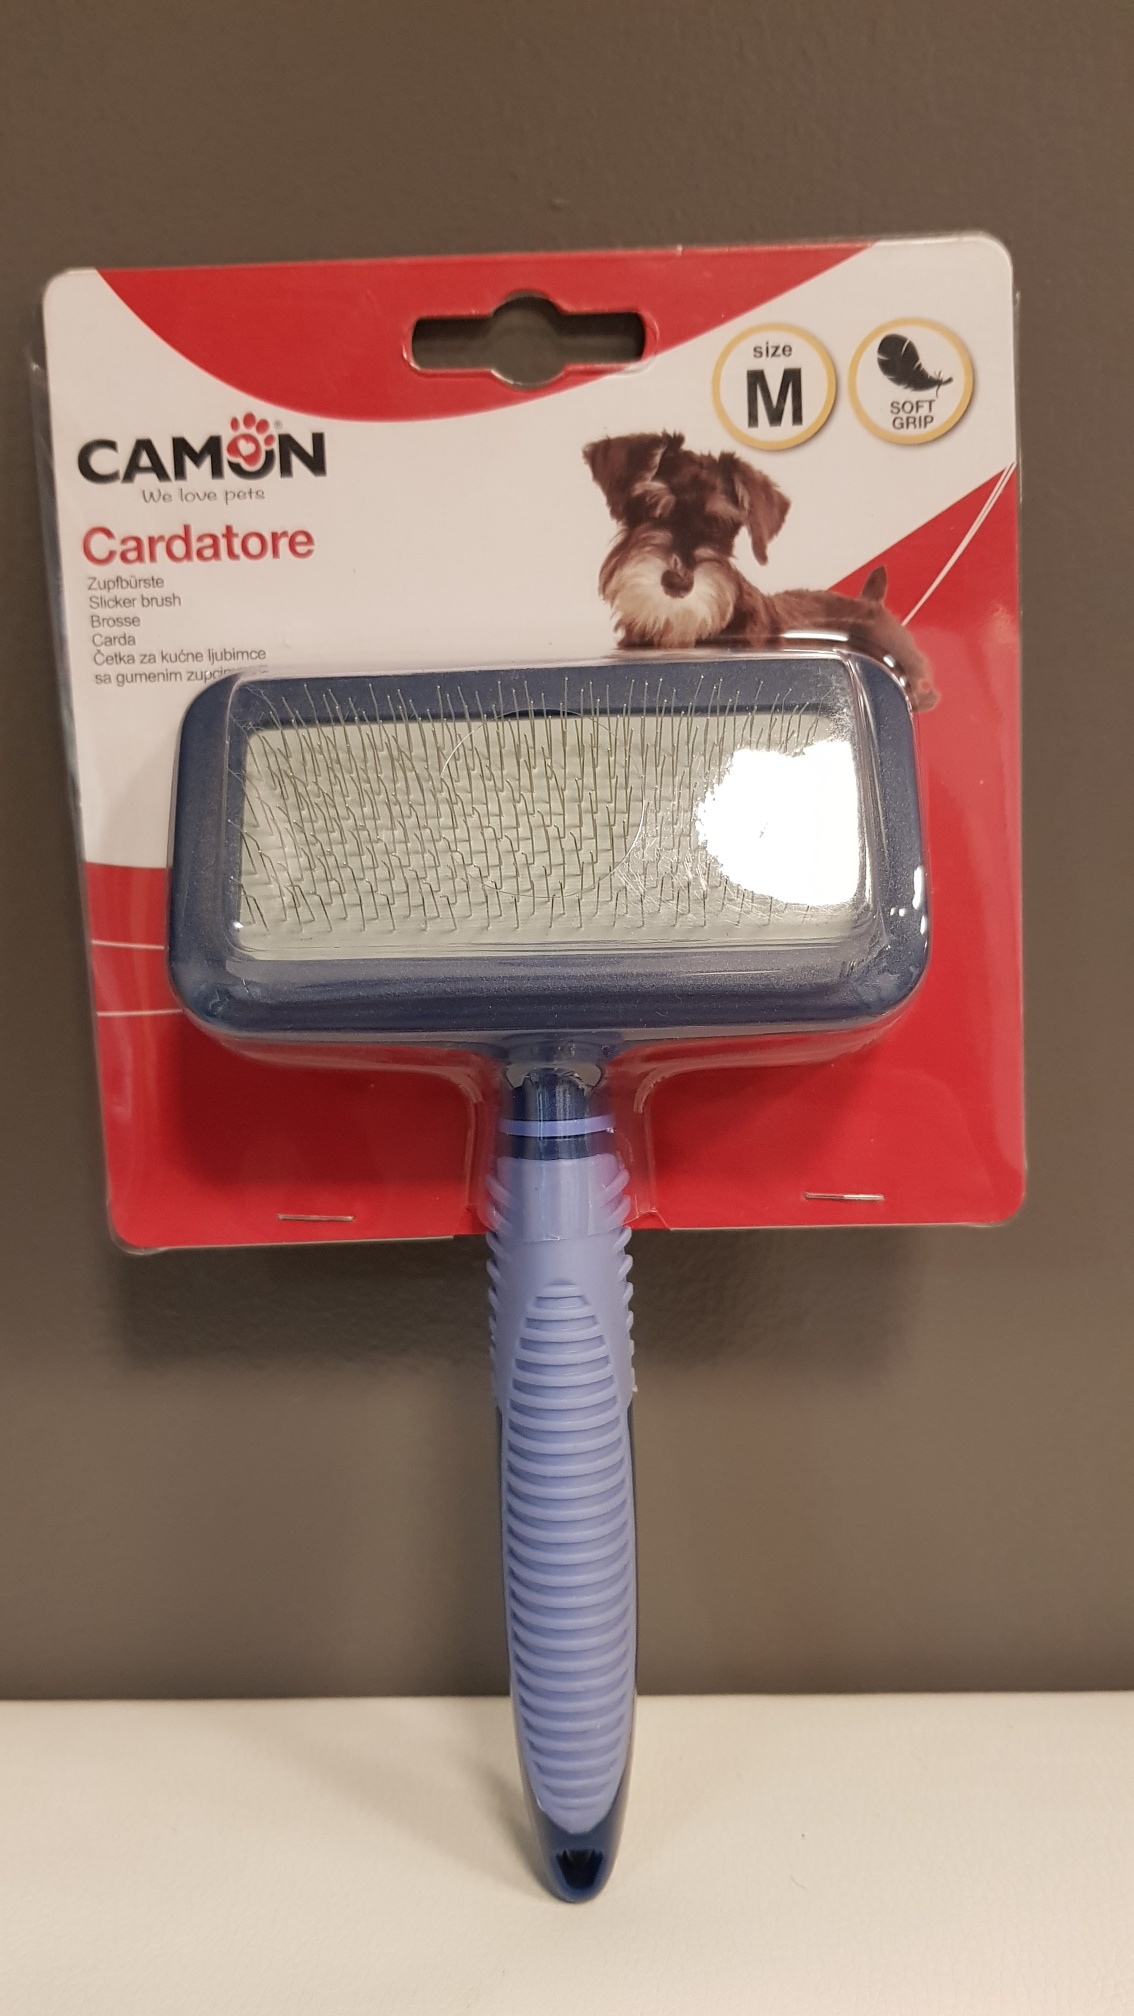 cardatore Camon soft grip_03